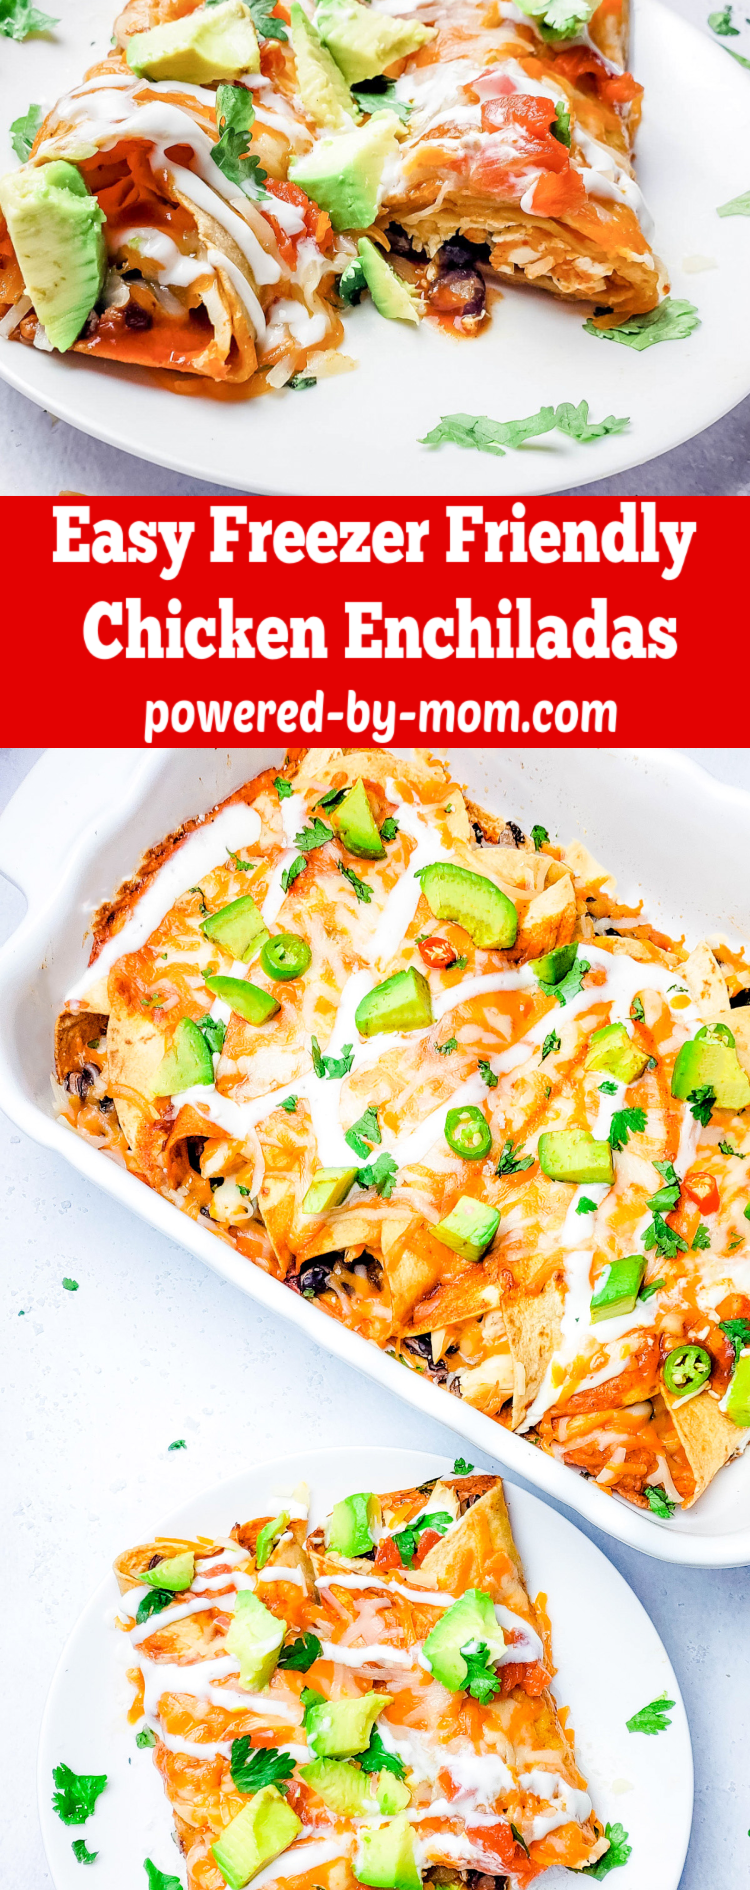 Easy Freezer Friendly Cheesy Chicken Enchiladas